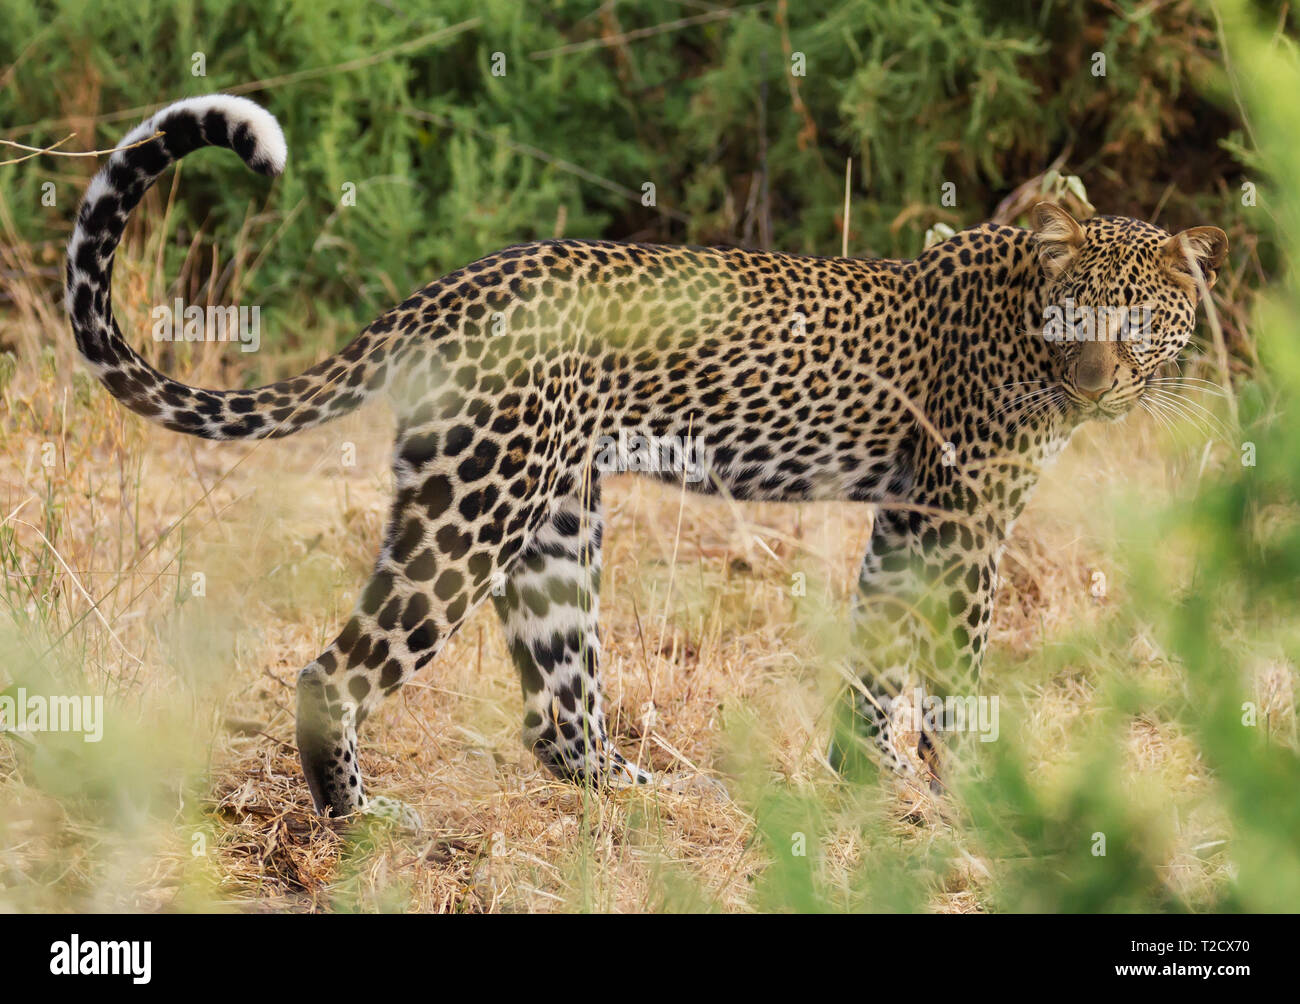 Leopard Panthera Pardus lato corpo viso guardando indietro occhi lunga coda baffi arricciati fino parzialmente nascosto da erba Samburu National Reserve Kenya Africa Foto Stock